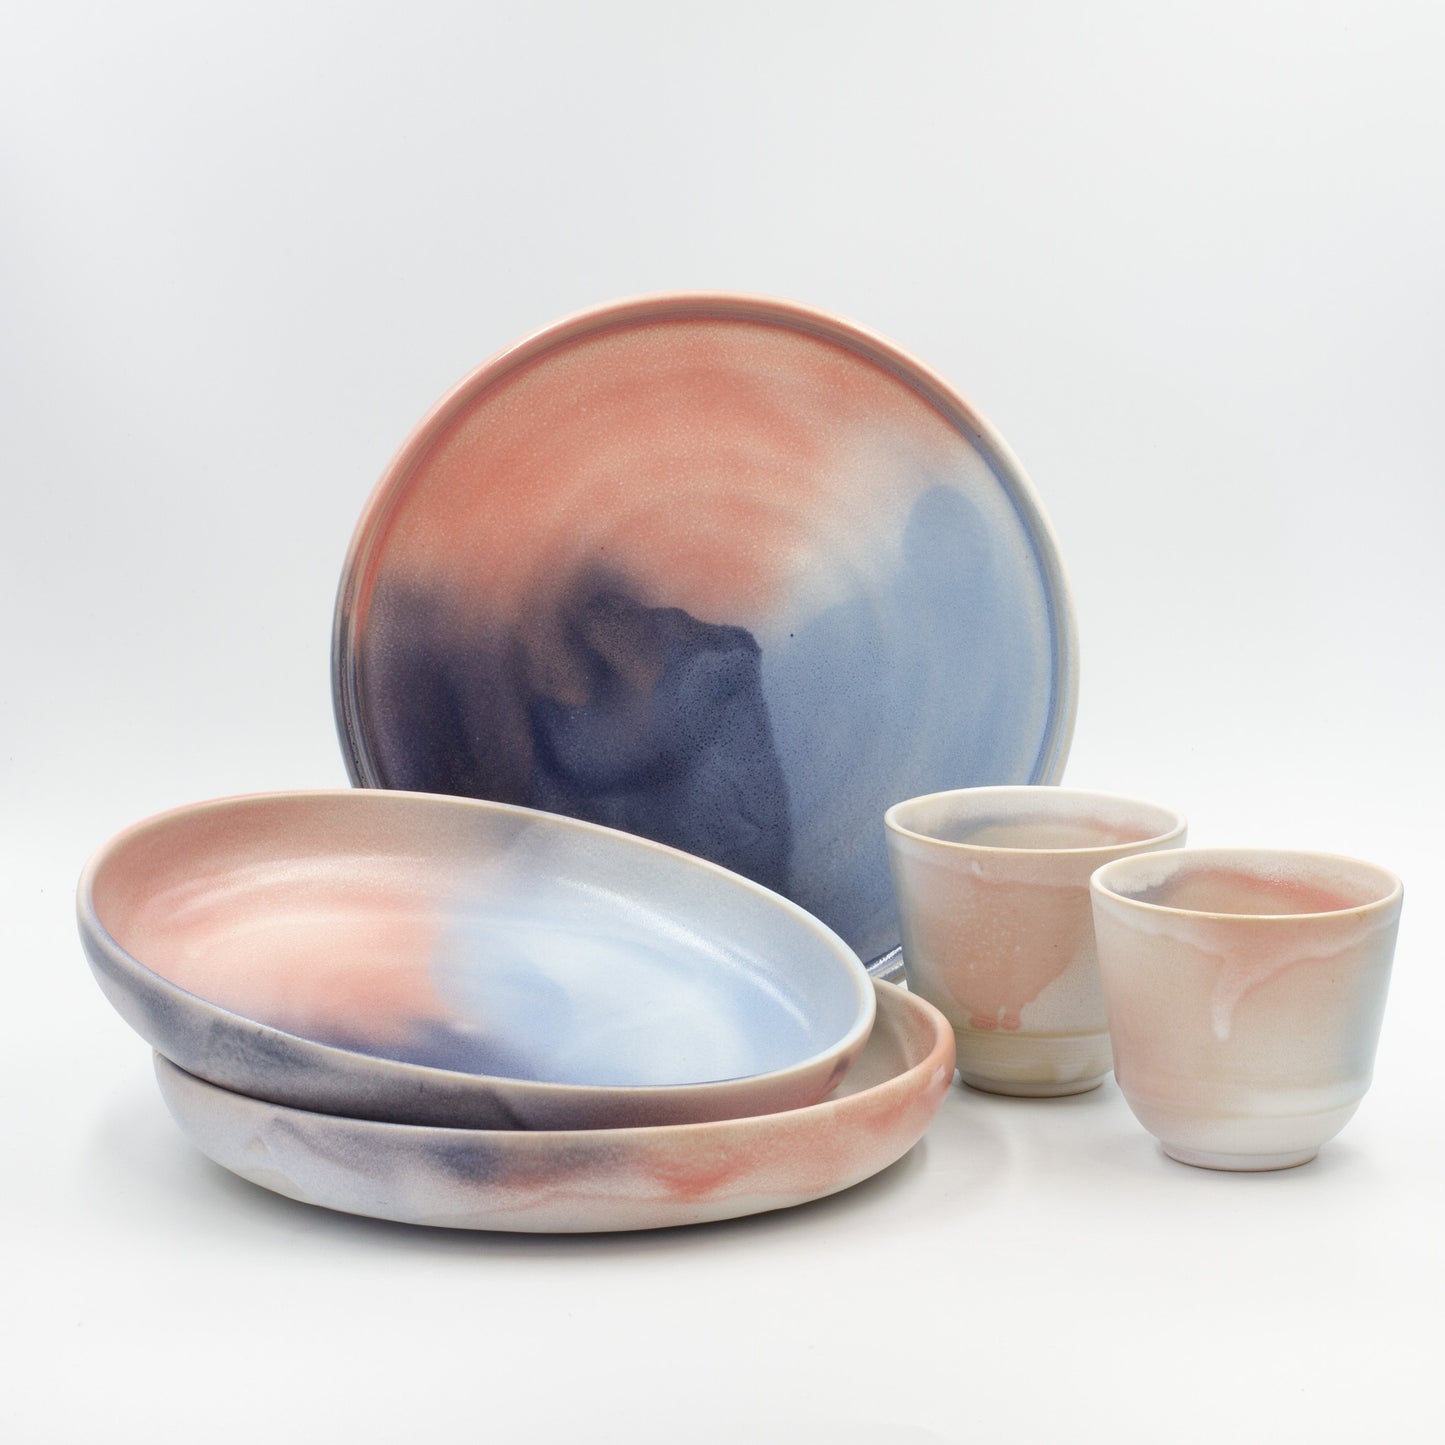 Handmade ceramic Deep Plate